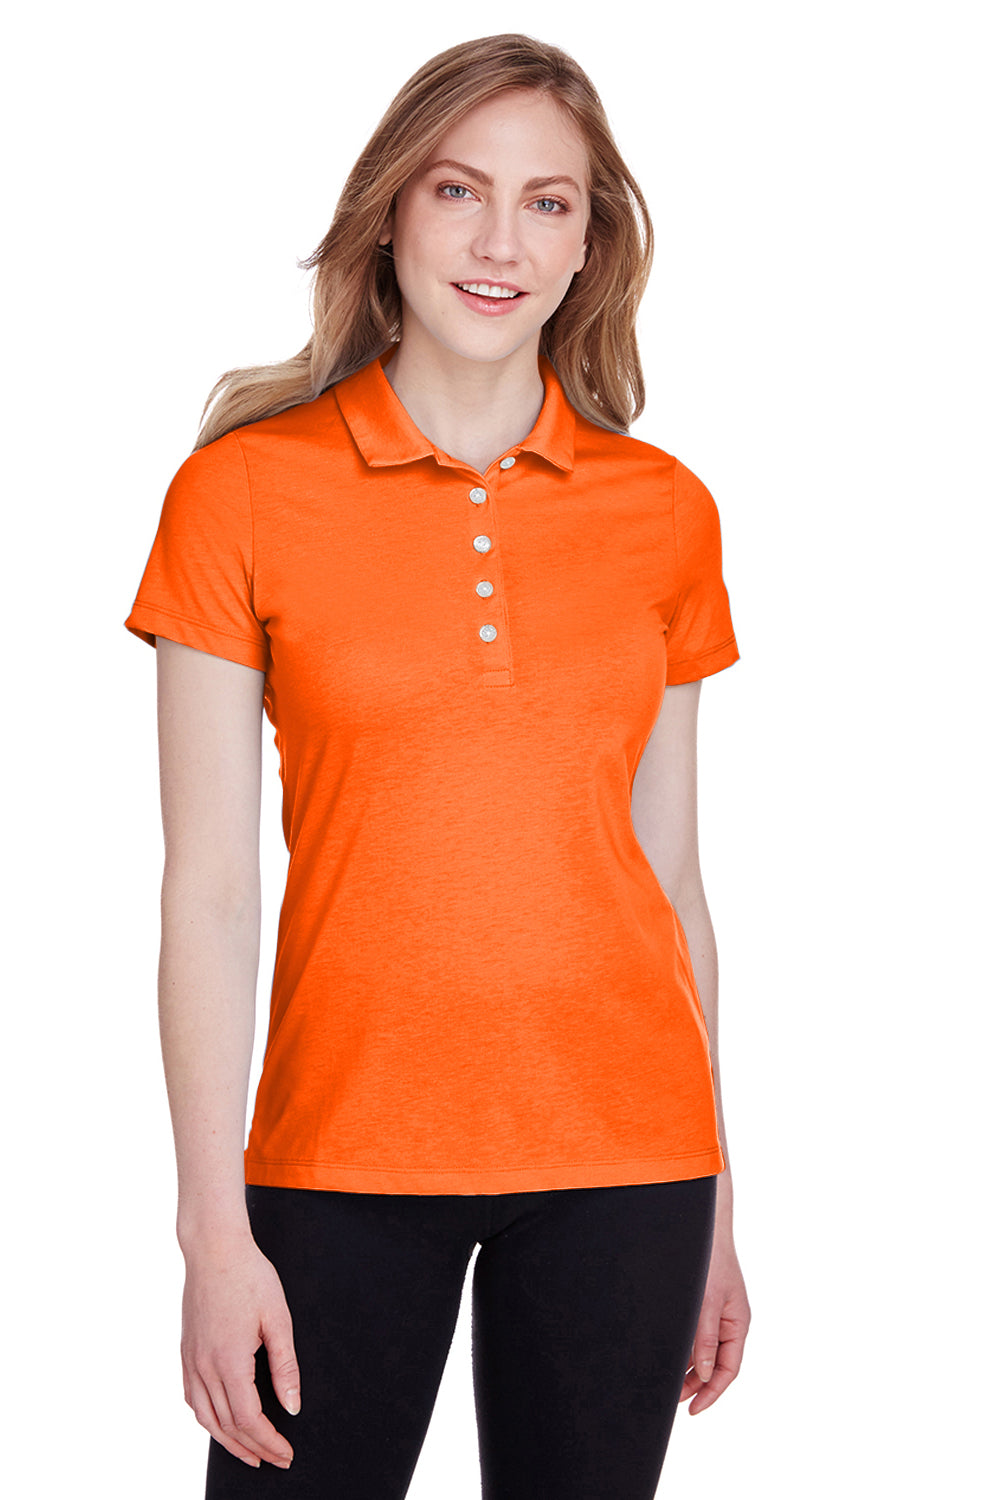 Puma 596921 Womens Fusion Performance Moisture Wicking Short Sleeve Polo Shirt Orange Front